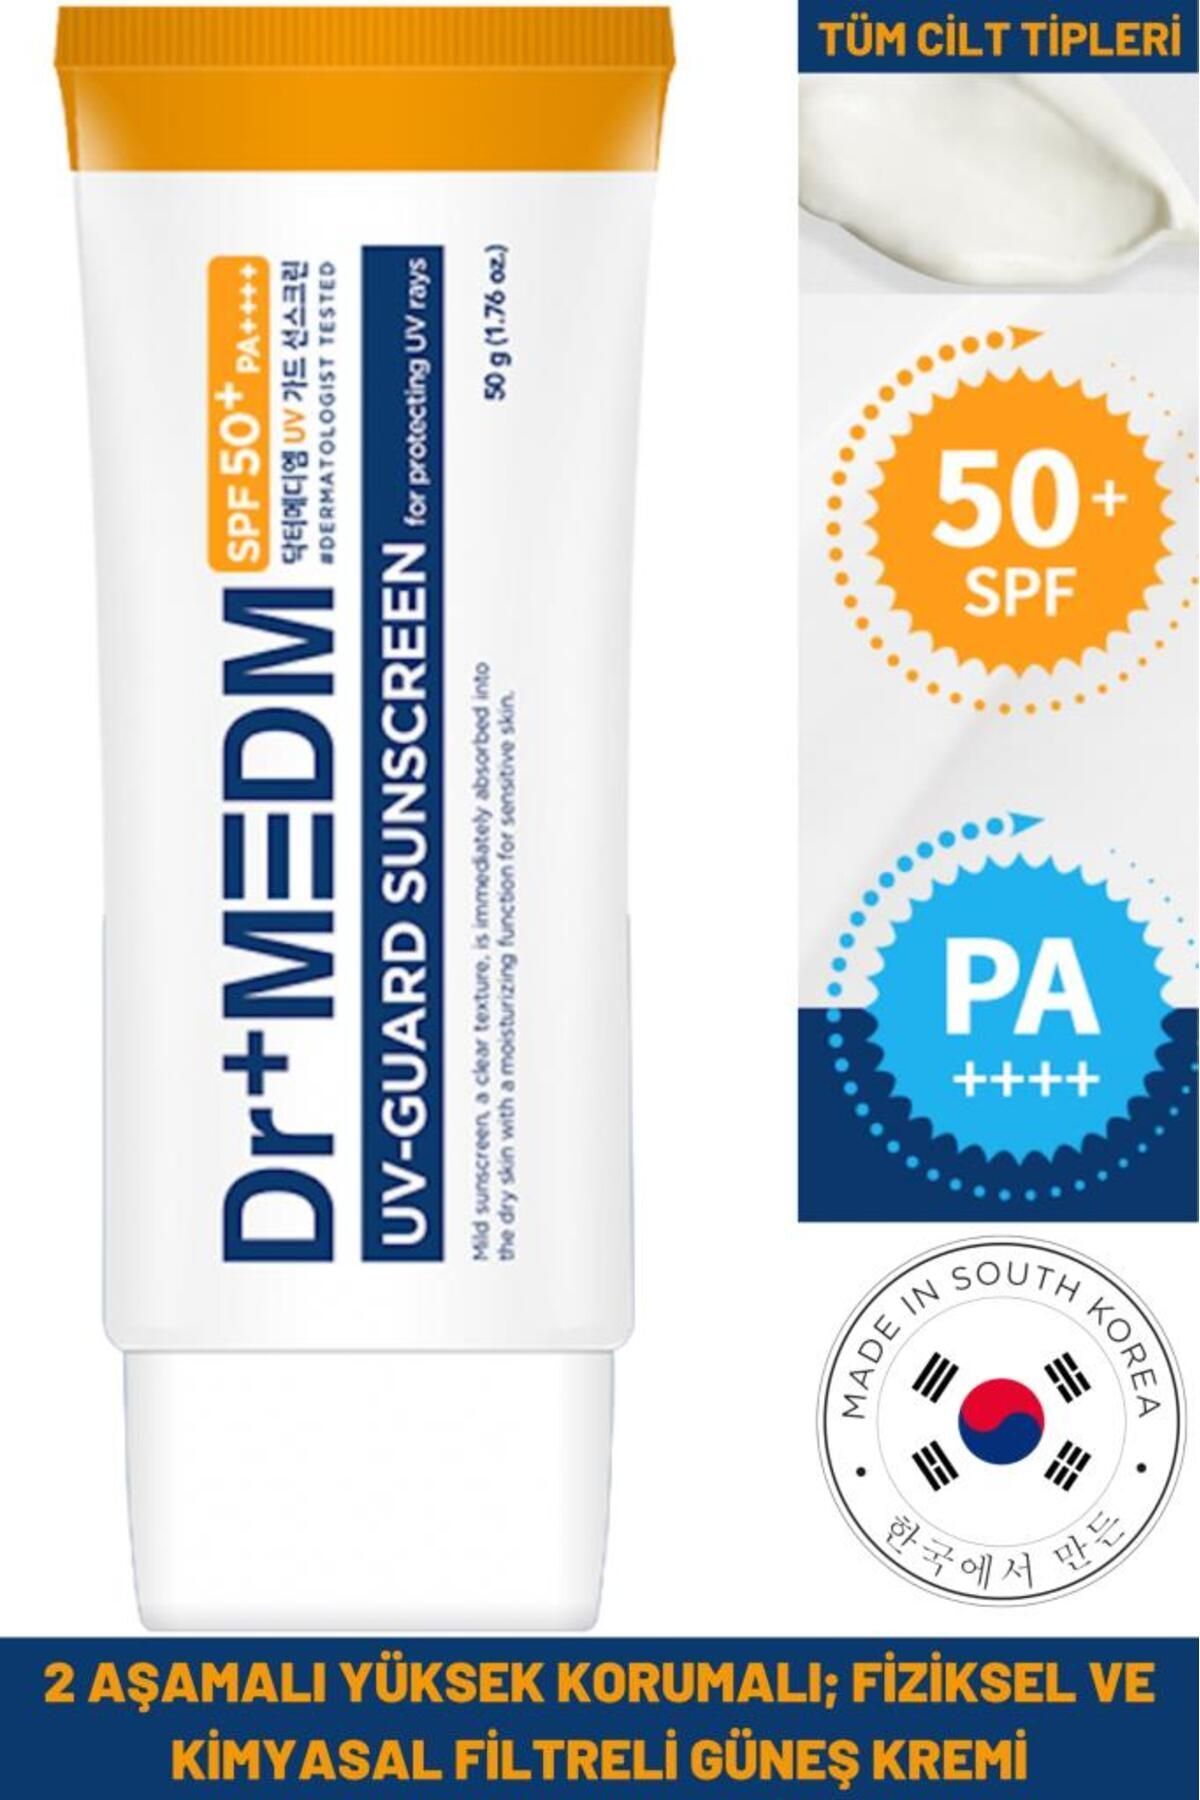 Dermal Dr+medm Spf50/pa++++ Uv 50 Ml Guard Sunscreen Yüksek Koruma Fiziksel&kimyasal Filtreli Güneş Kremi